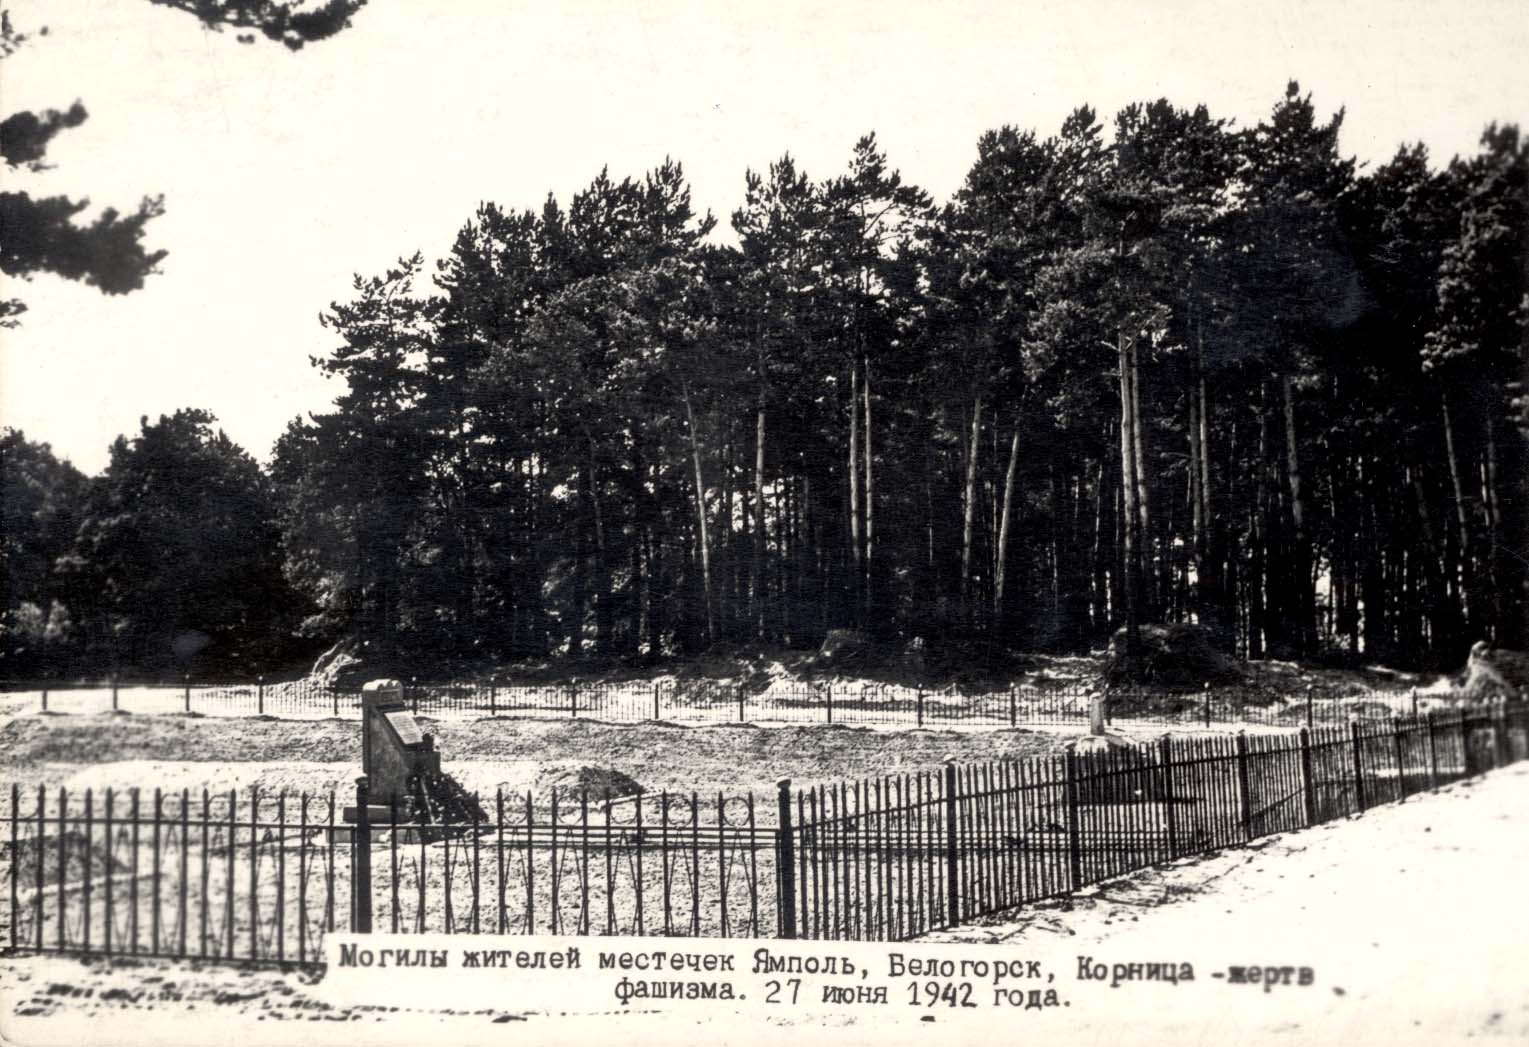 Lyakhovtsy Forest murder site